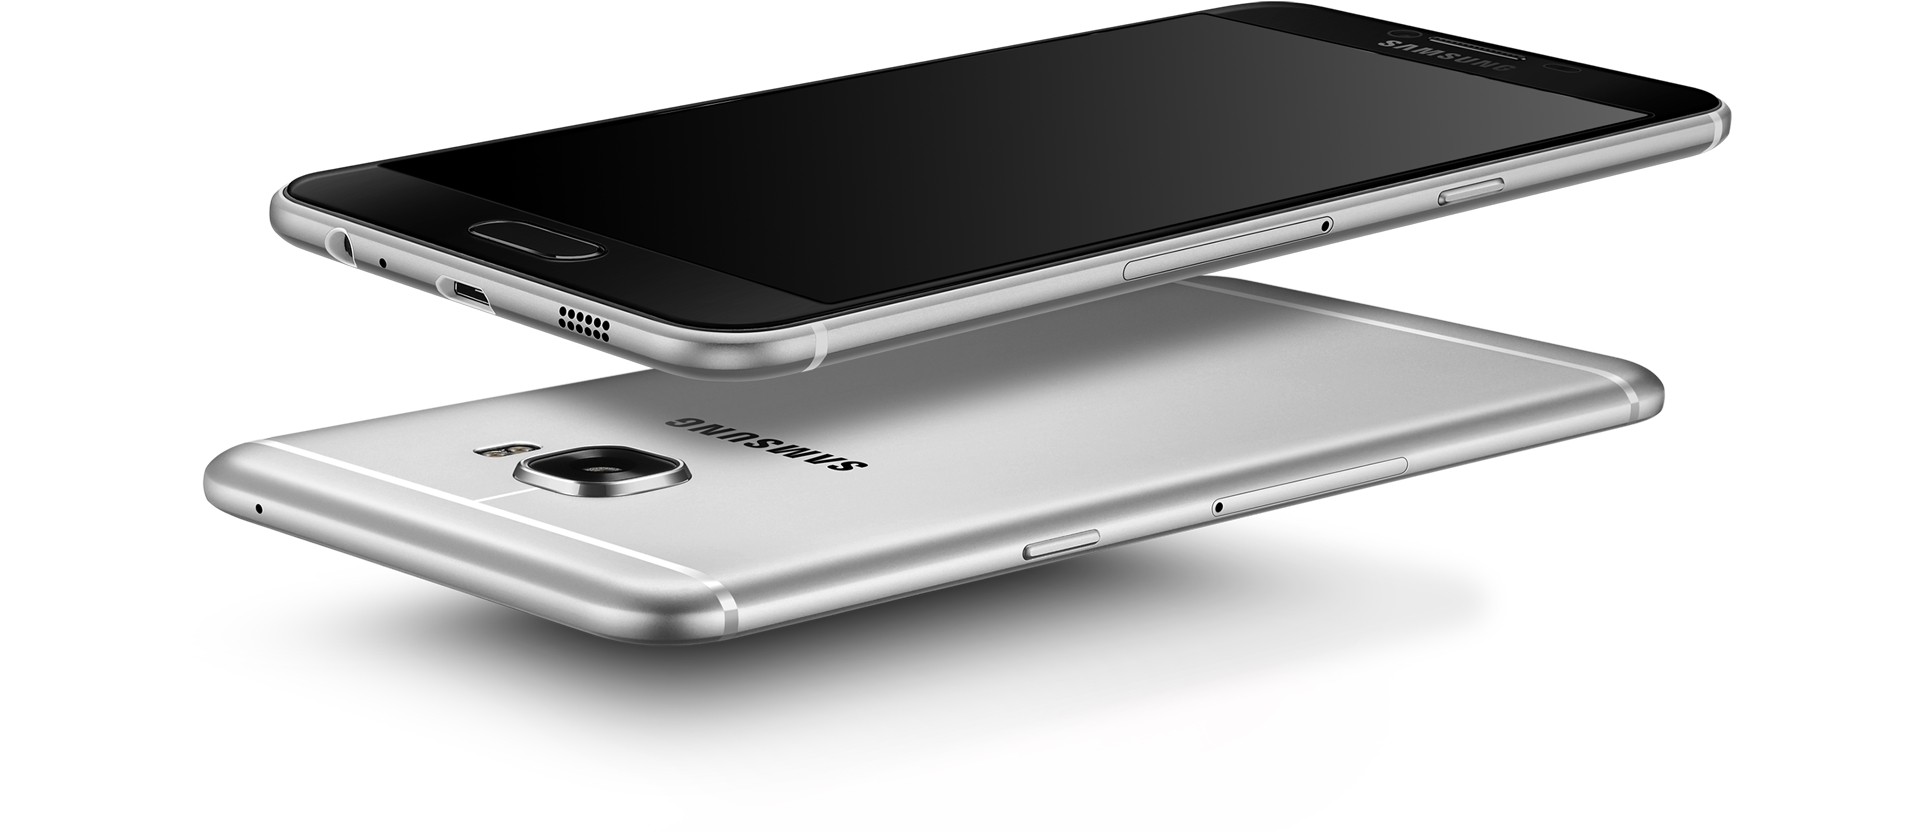 Samsung Galaxy Pro 15